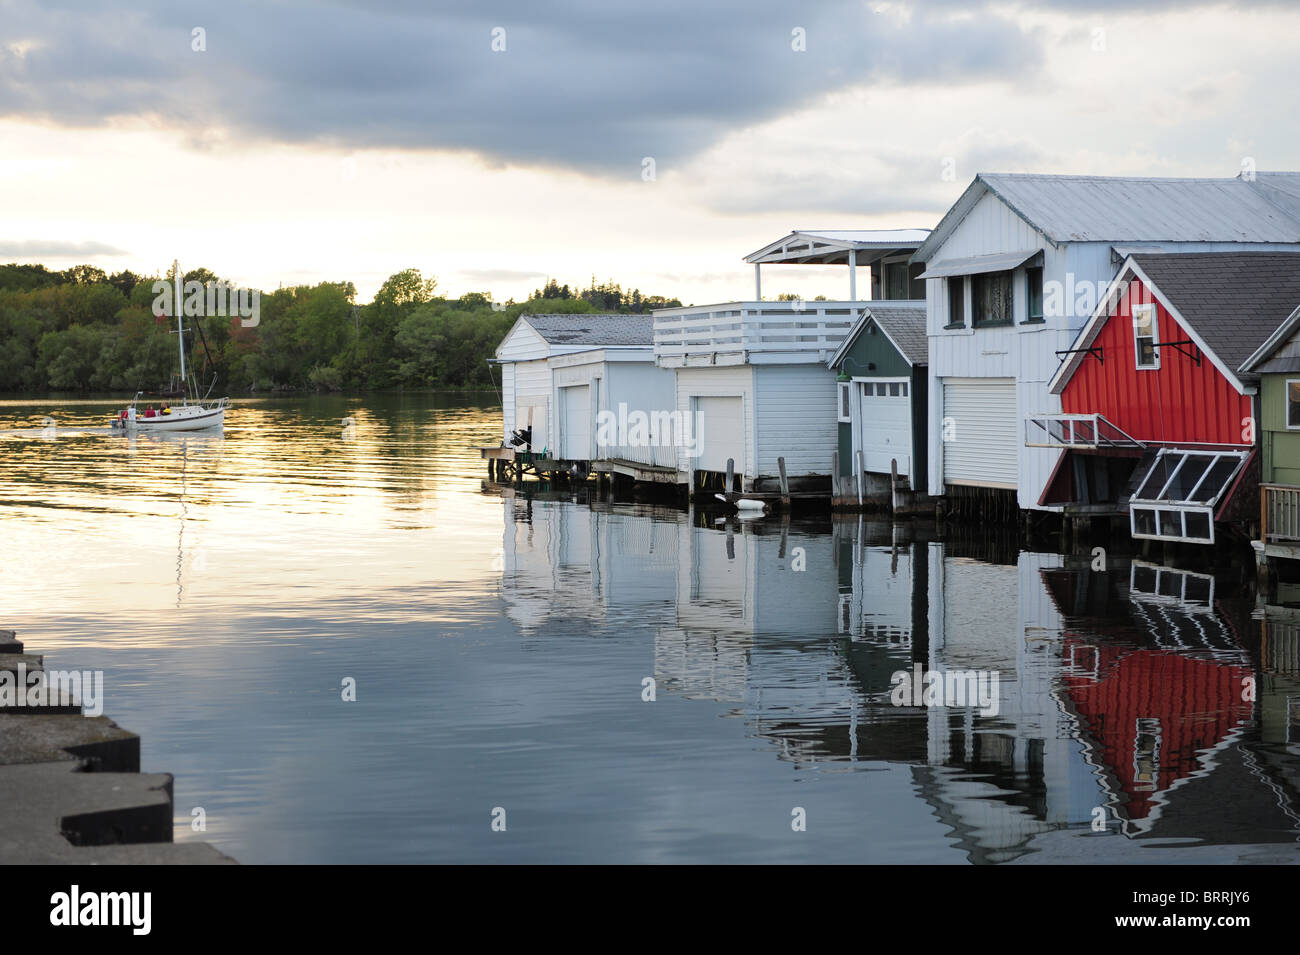 USA New York NY Canandaigua Region der Finger Lakes - Hausboote am See Hafen Stockfoto